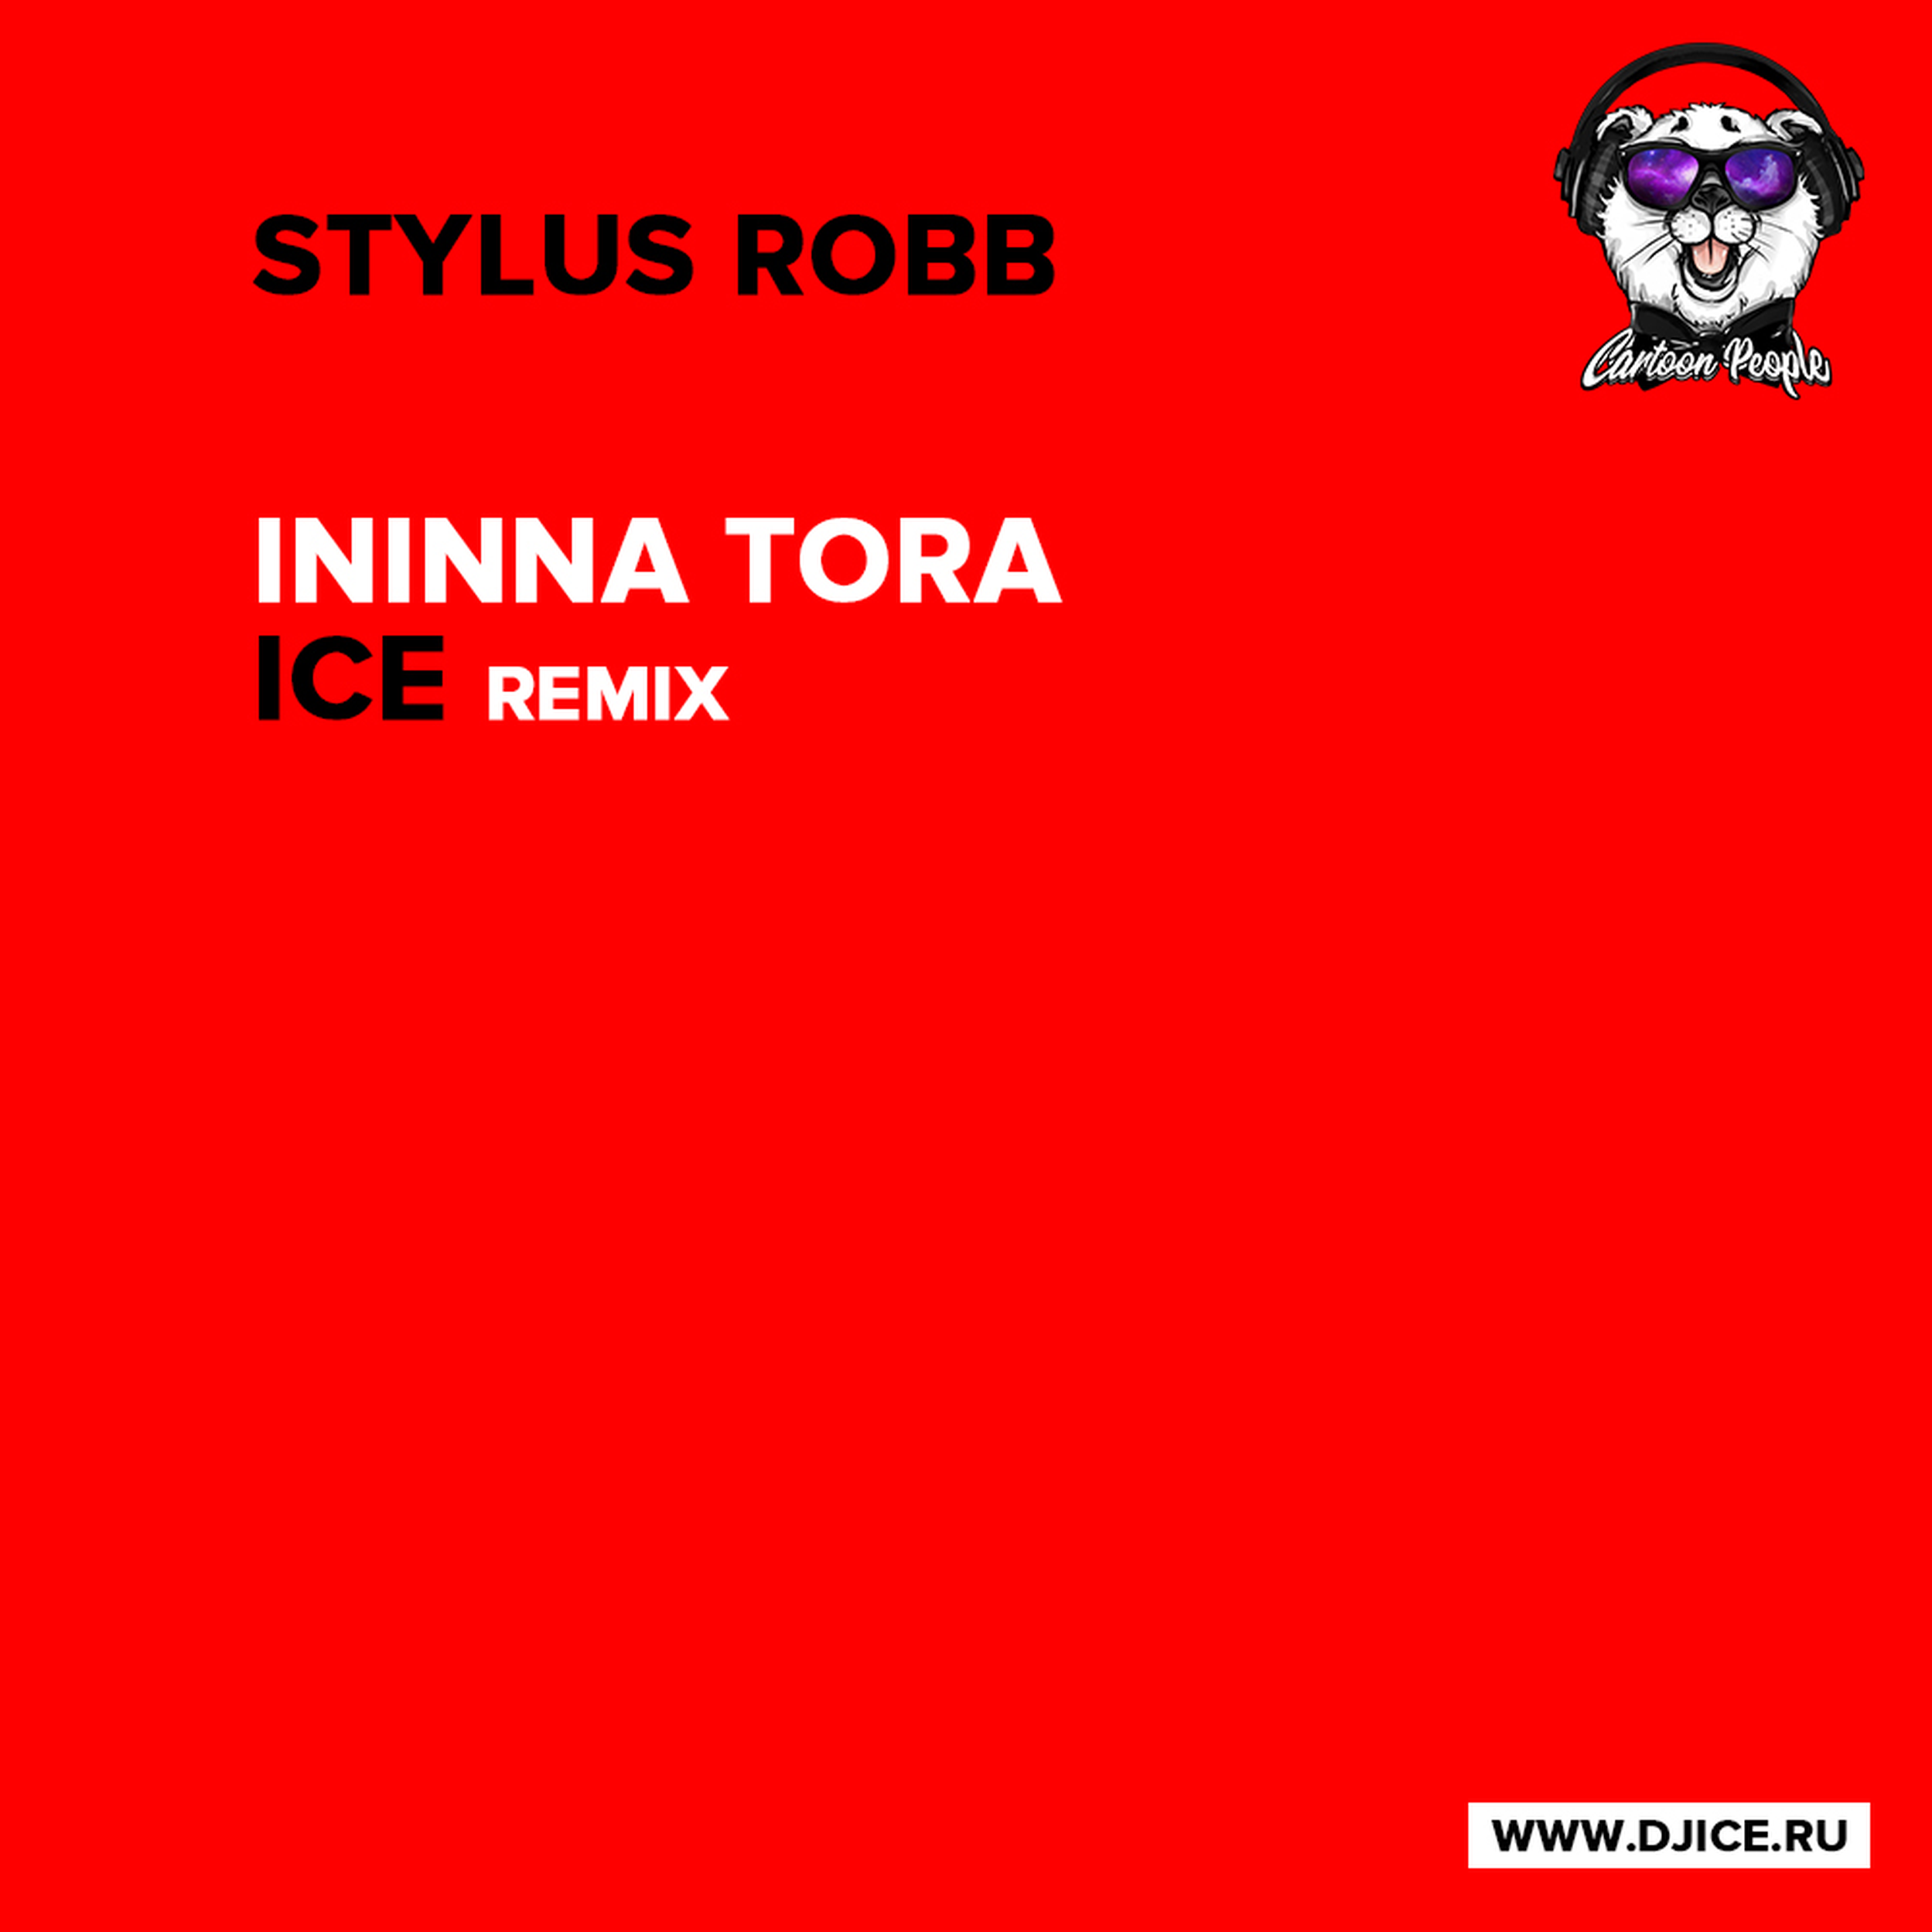 Песню айс ремикс. Stylus Robb. Ininna Tora. Ininna Tora Tiesto Remix DJ Tiesto альбомы Tora Tora.